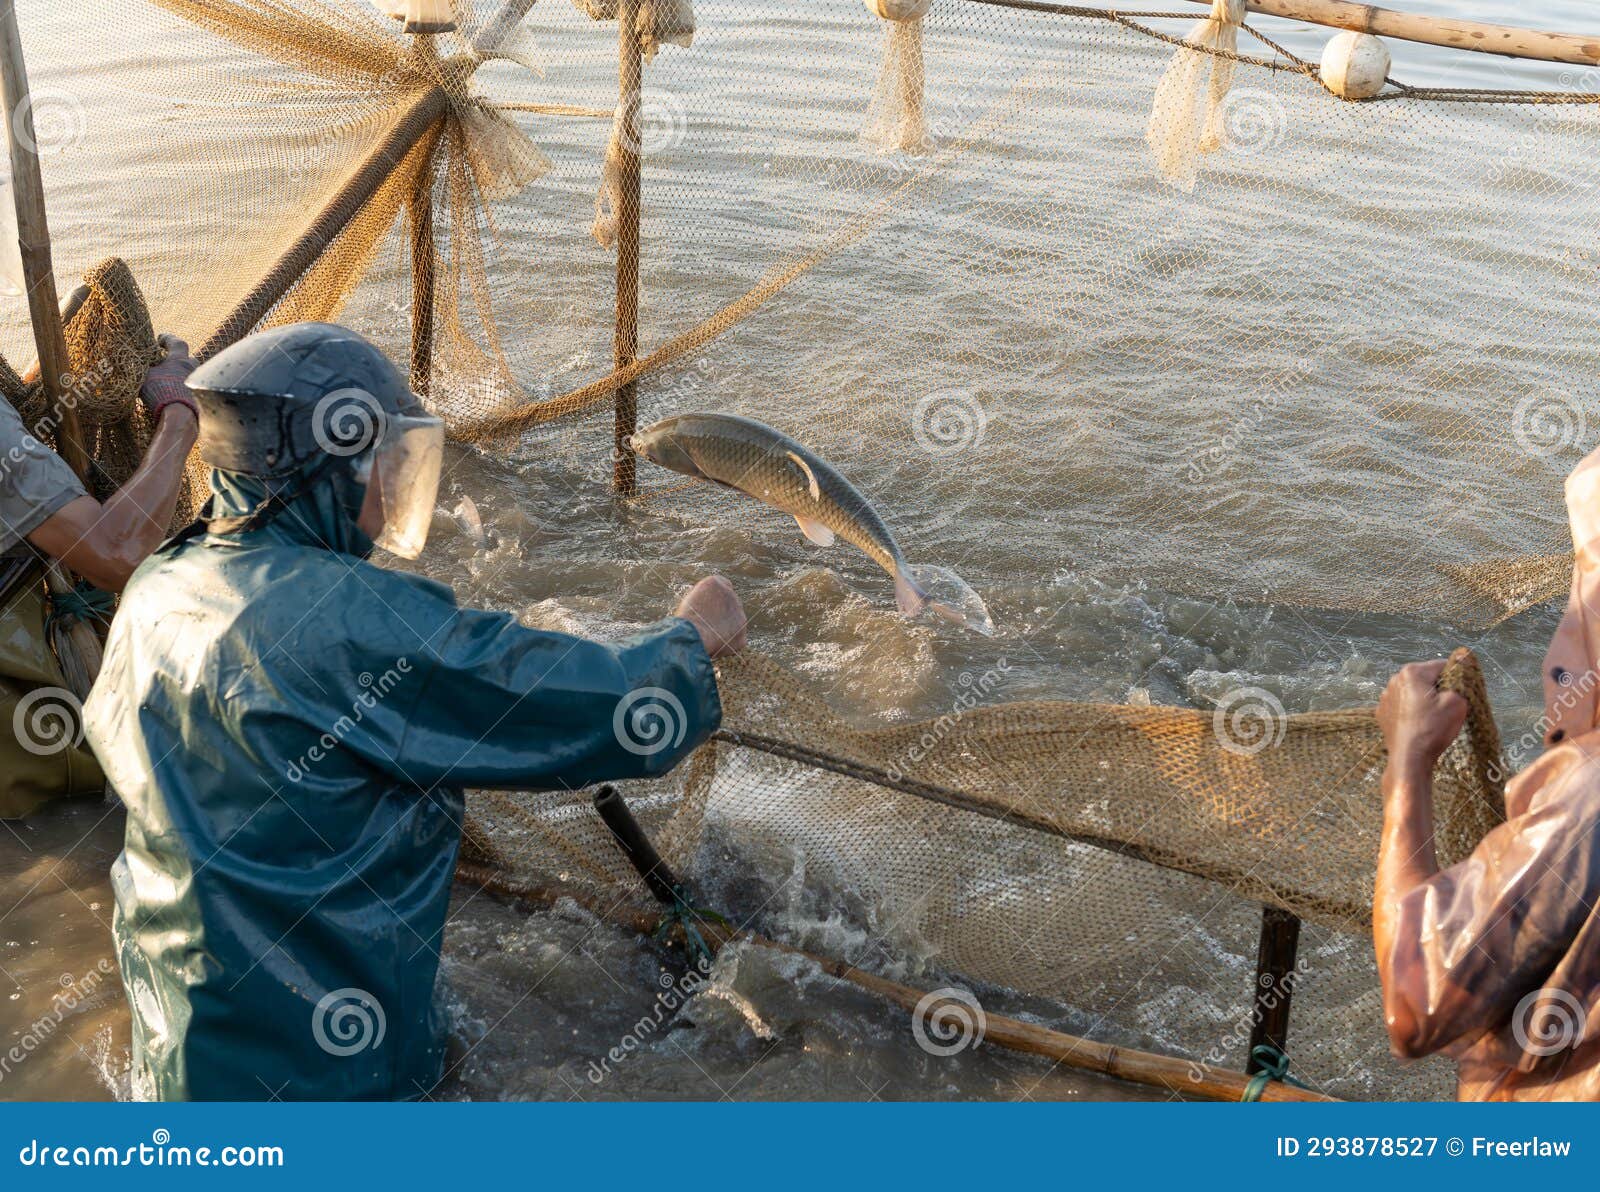 Fishermen Using Seine Nets To Catch Fish in Morning Stock Image